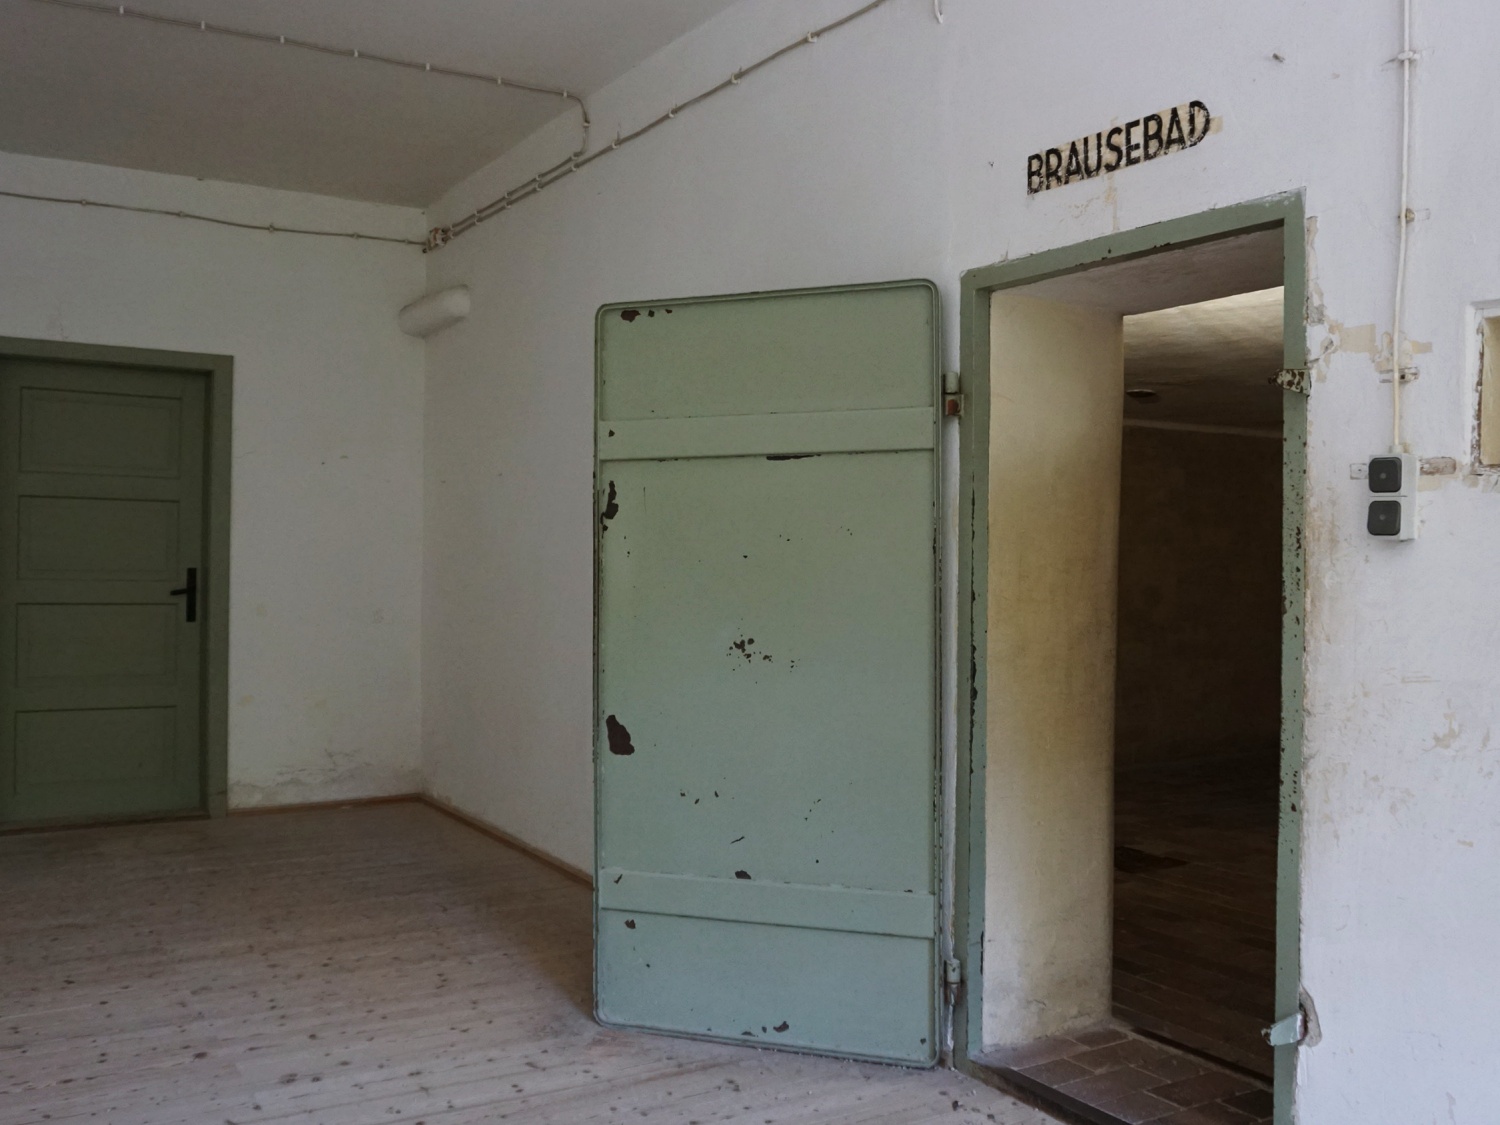 Dachau gas chambers